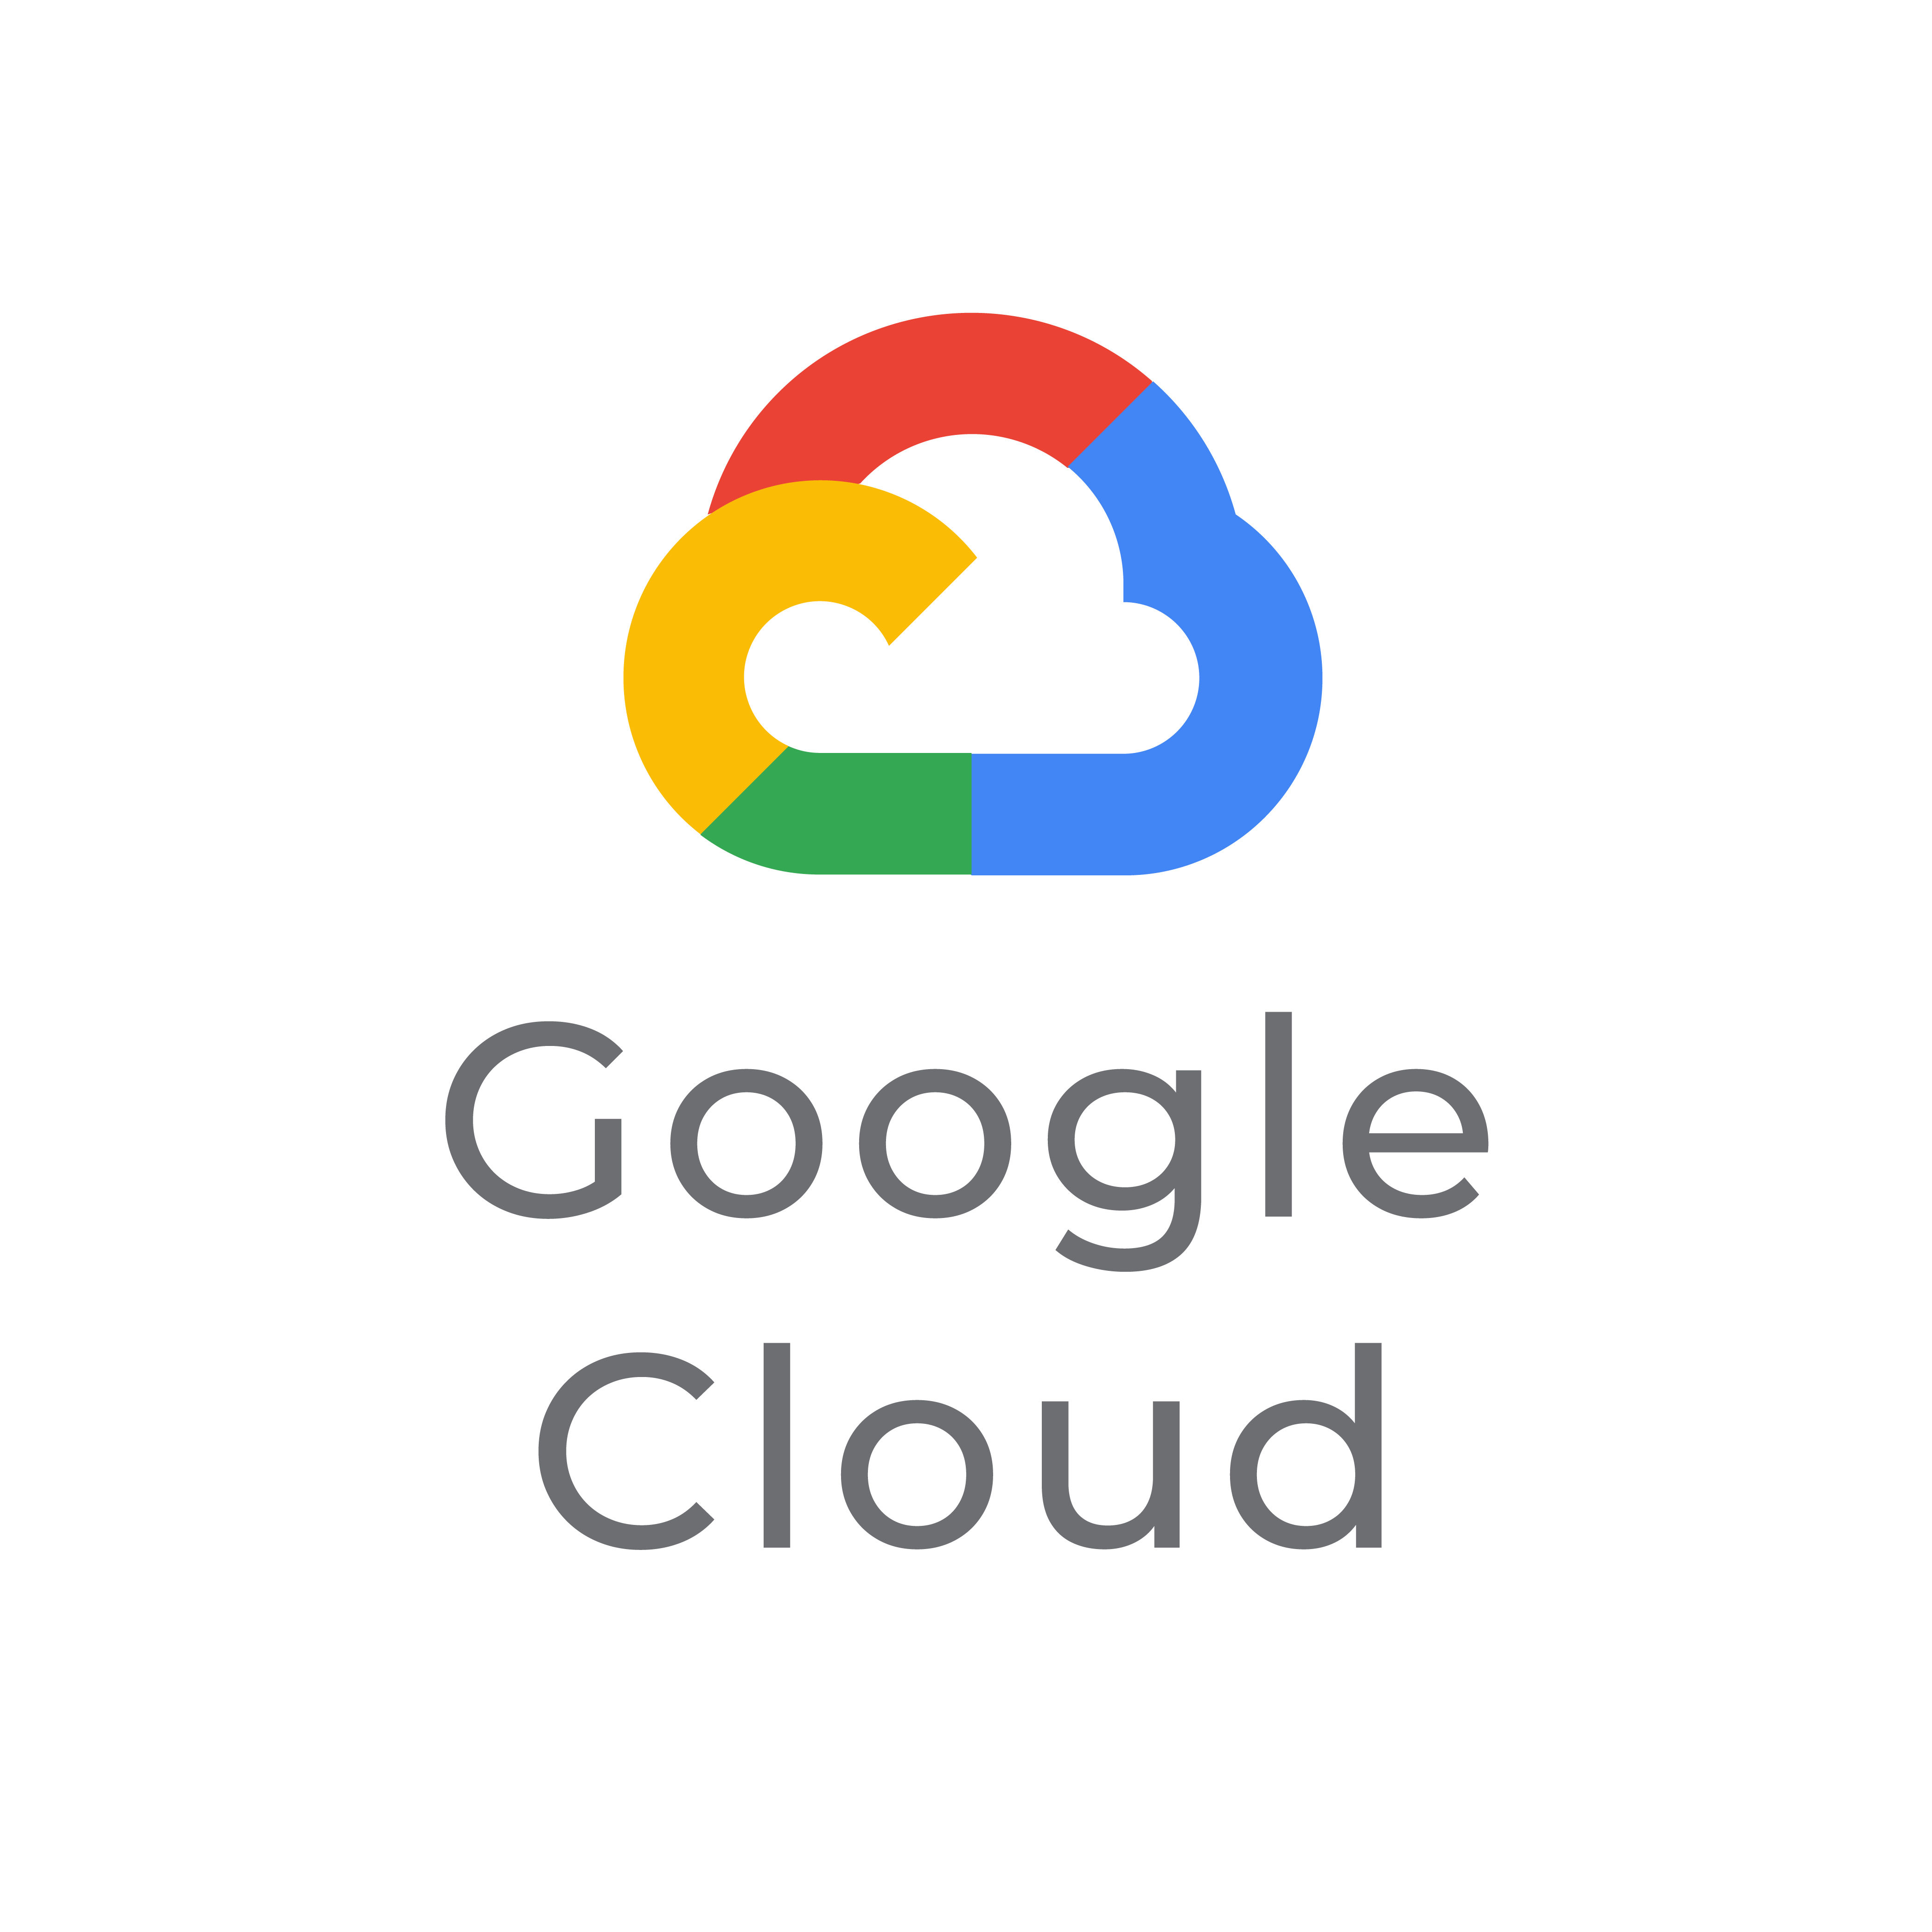 Google Cloud Logo 01 min | Technosprout